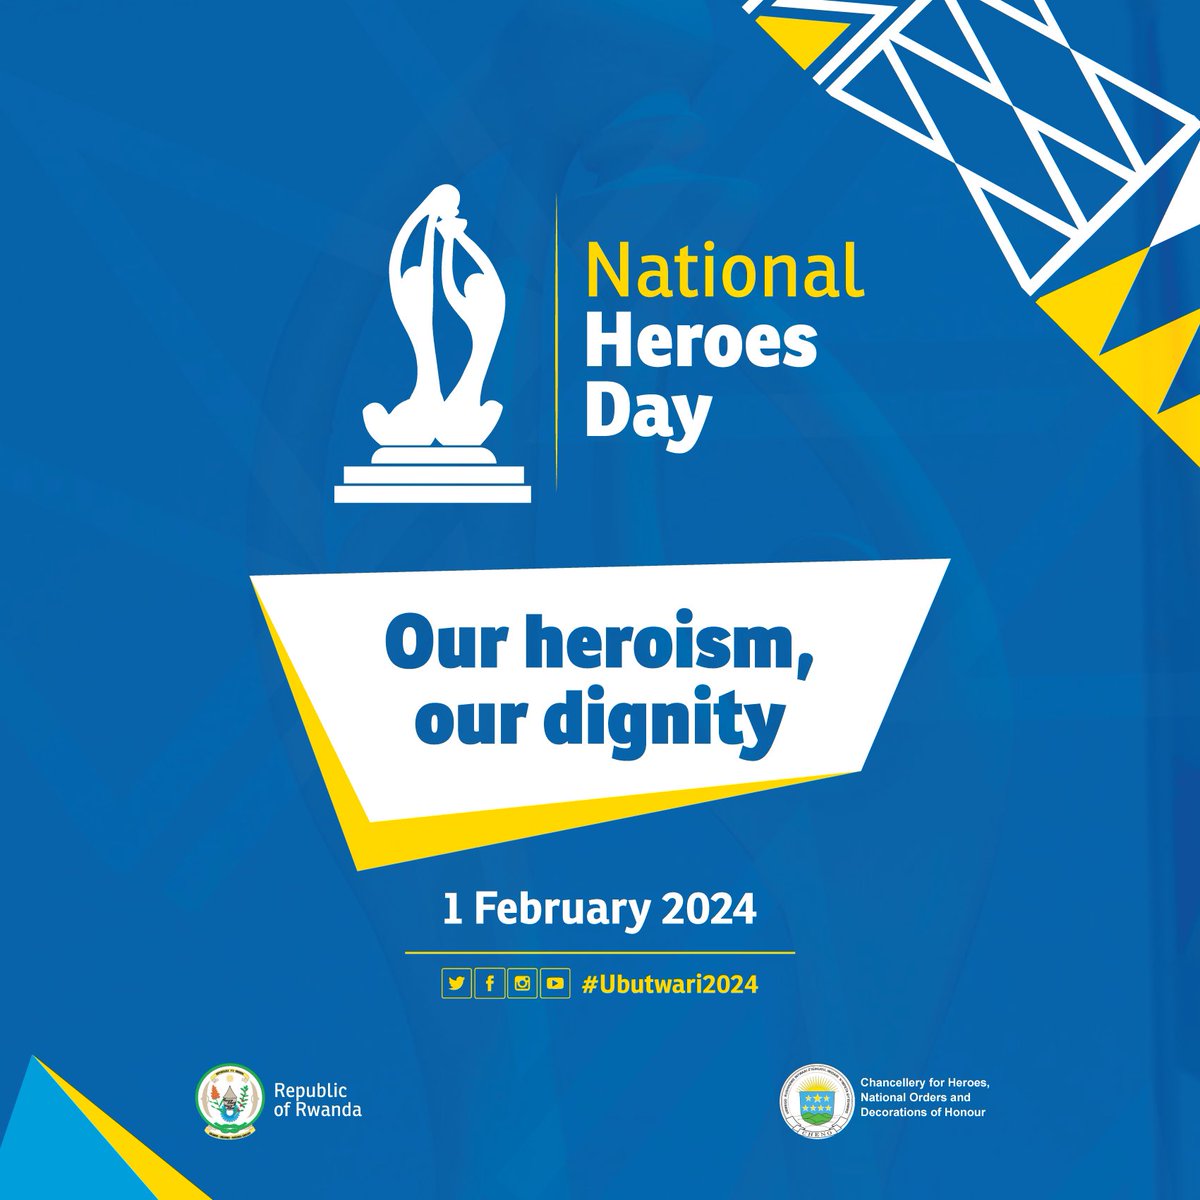 Happy Heroes Day 
#Ubutwari2024